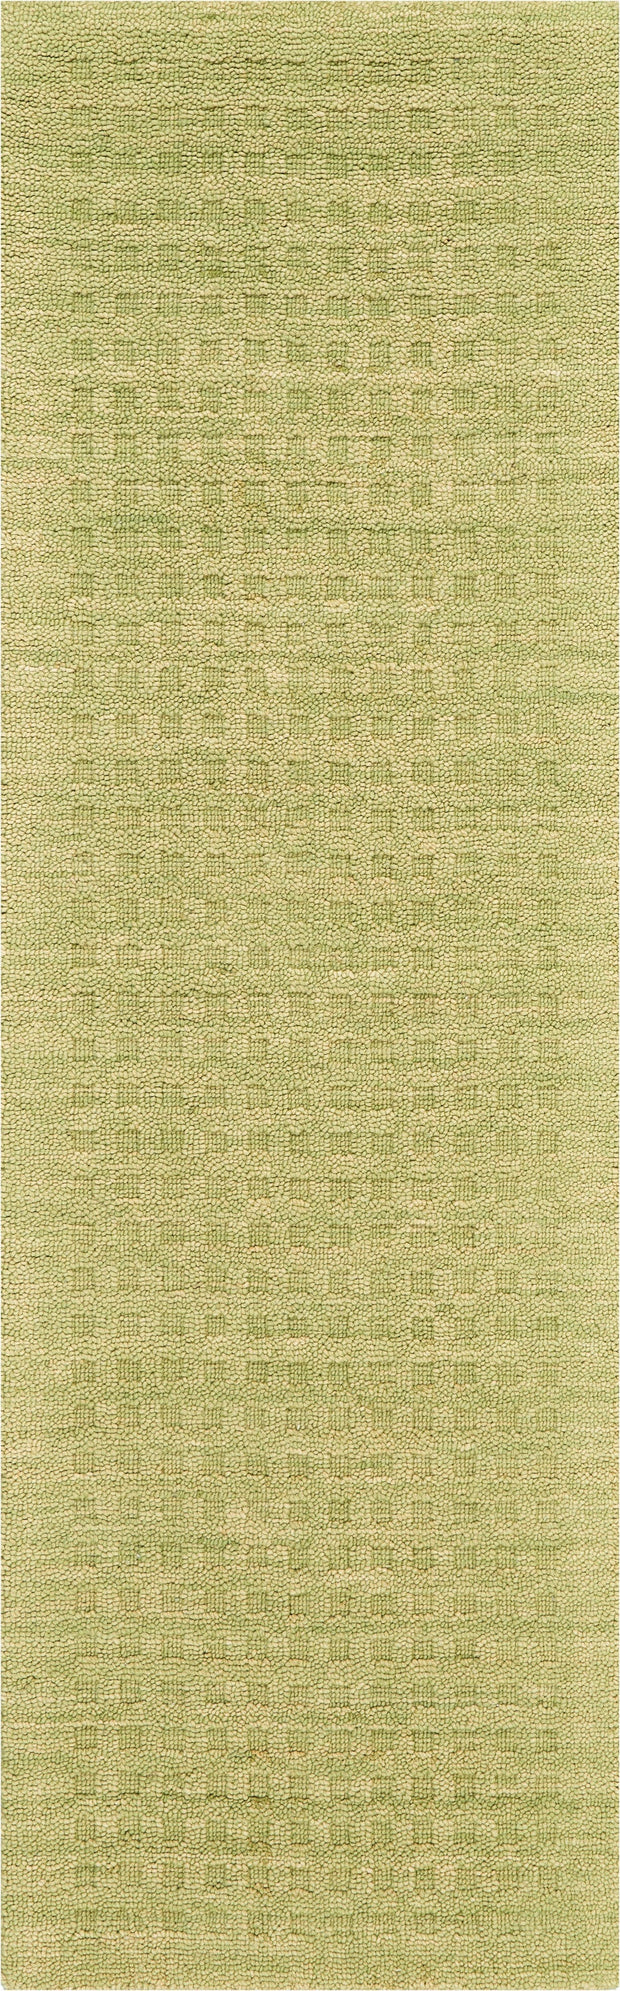 marana handmade green rug by nourison 99446400437 redo 2